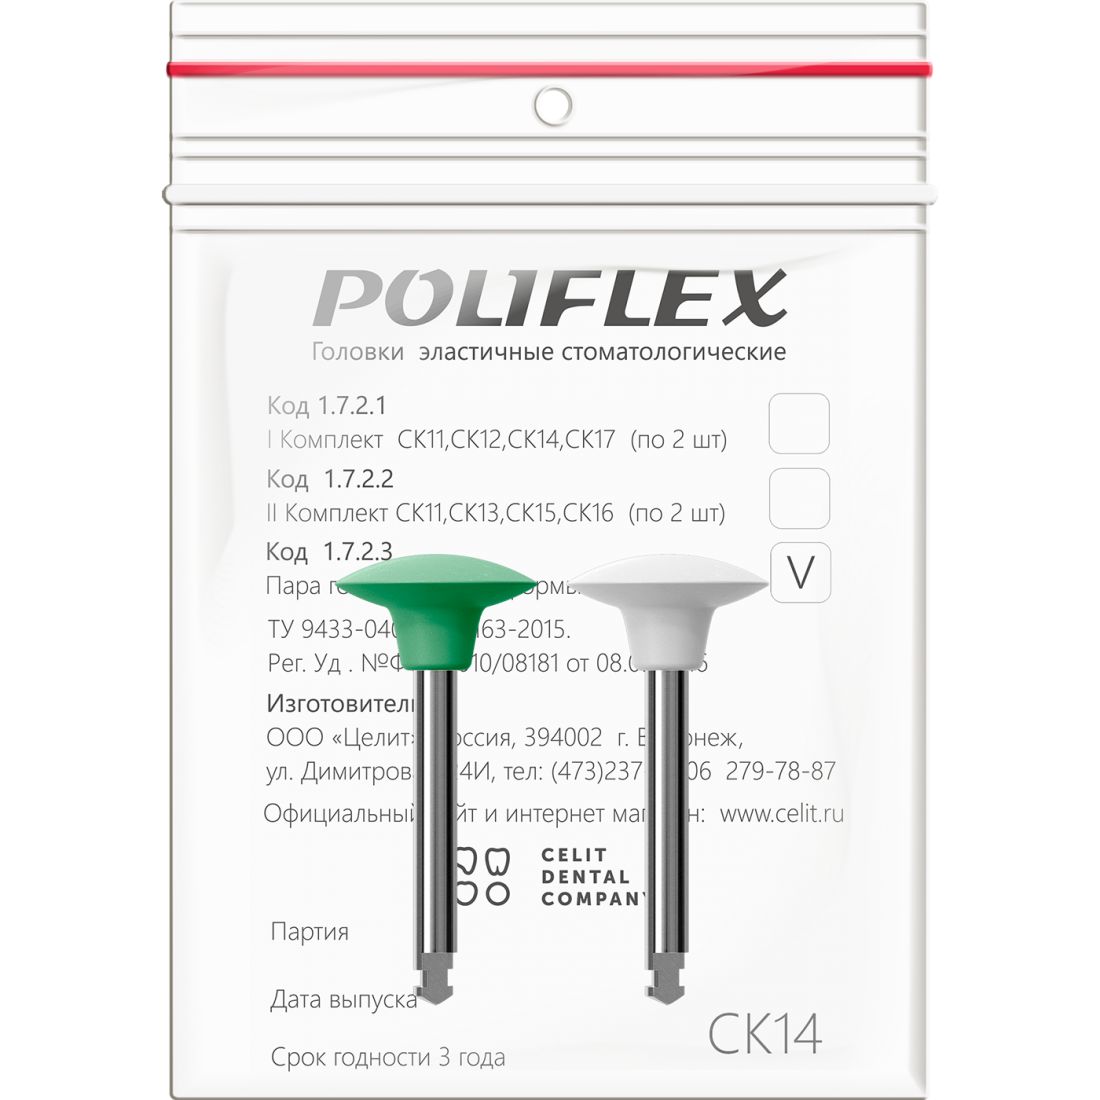 Poliflex СК14 - головки Полифлекс для обработки пломб (2шт)